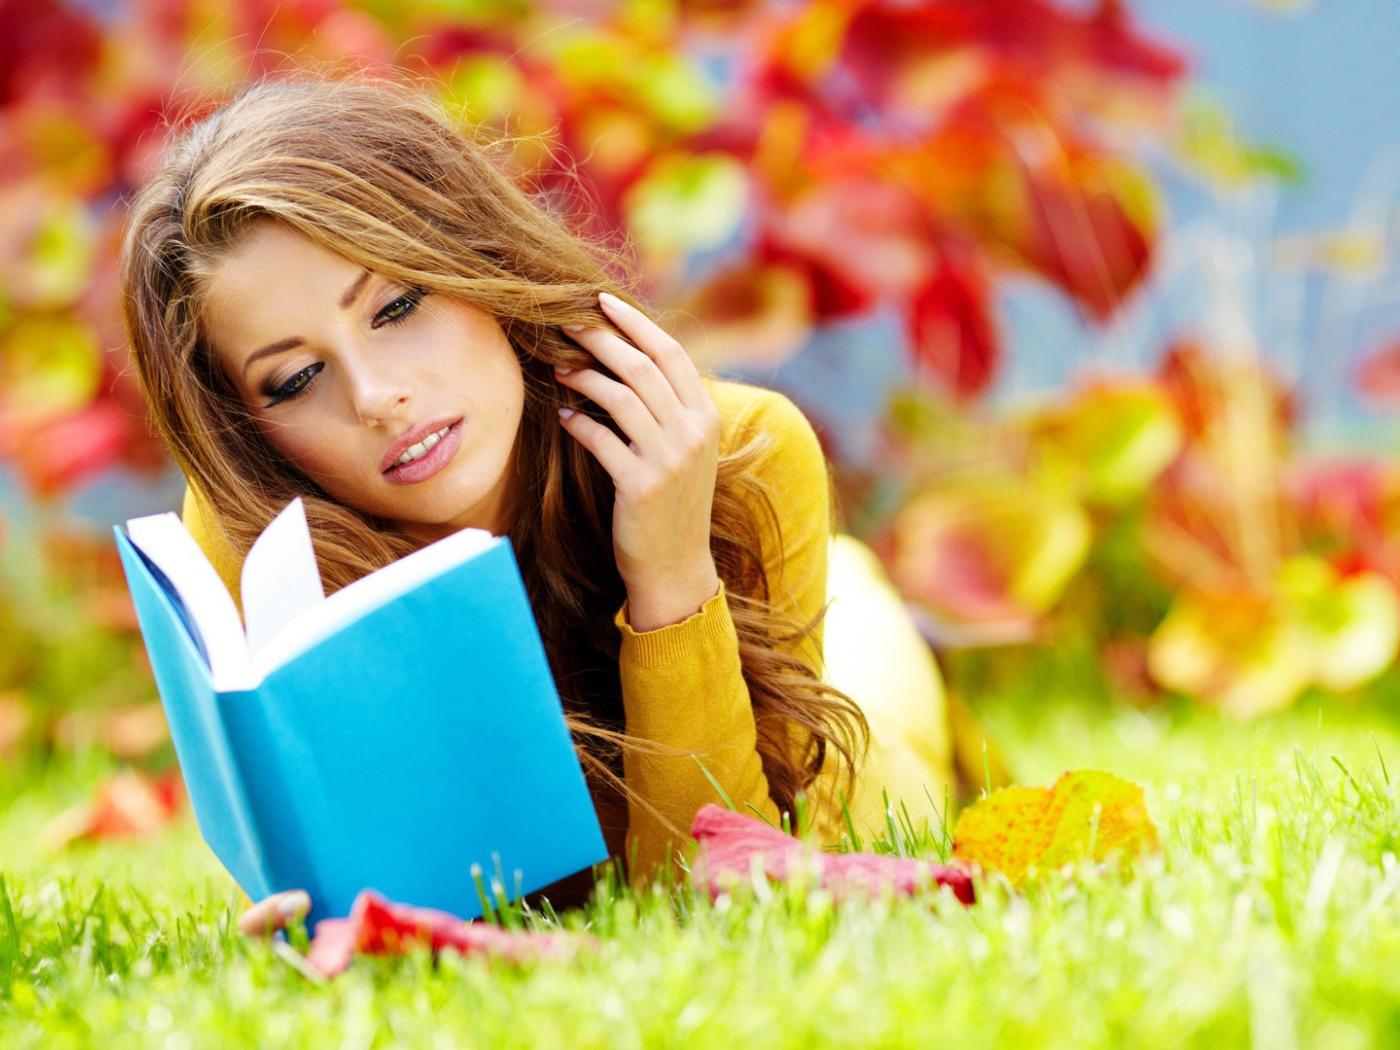 The girl on the grass reading a book Desktop wallpaper